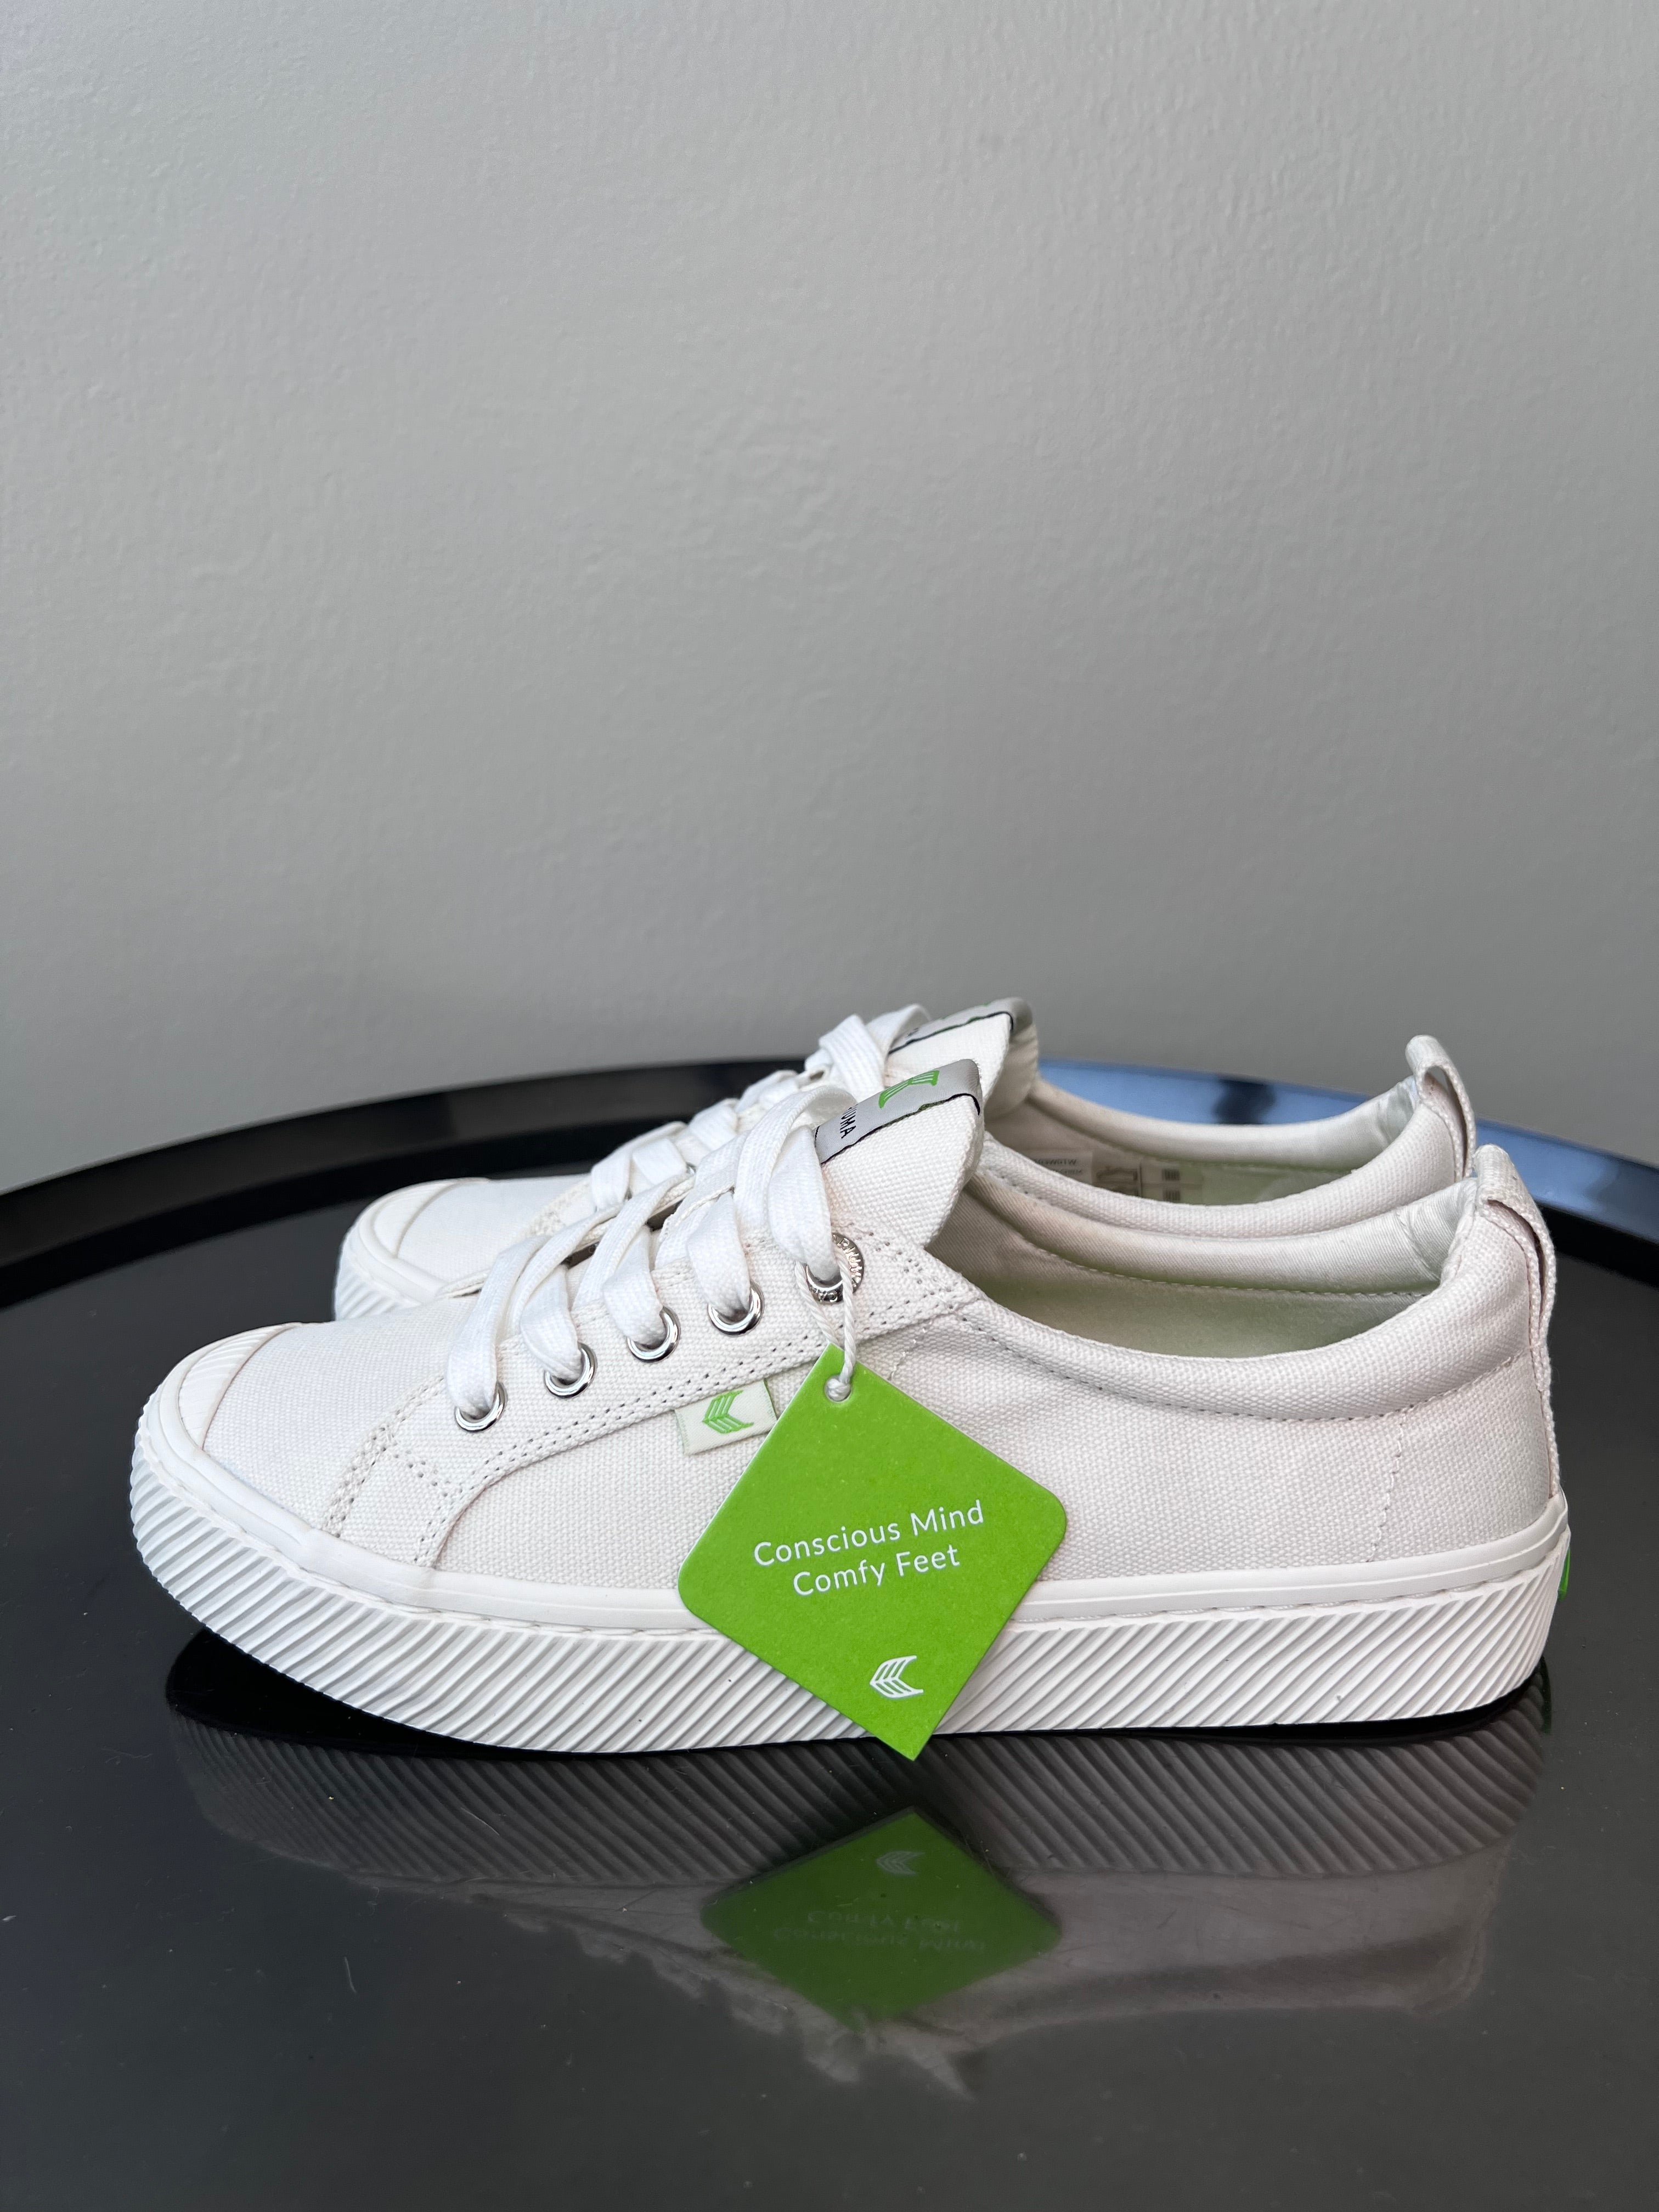 Low white canvas sneakers - CARIUMA